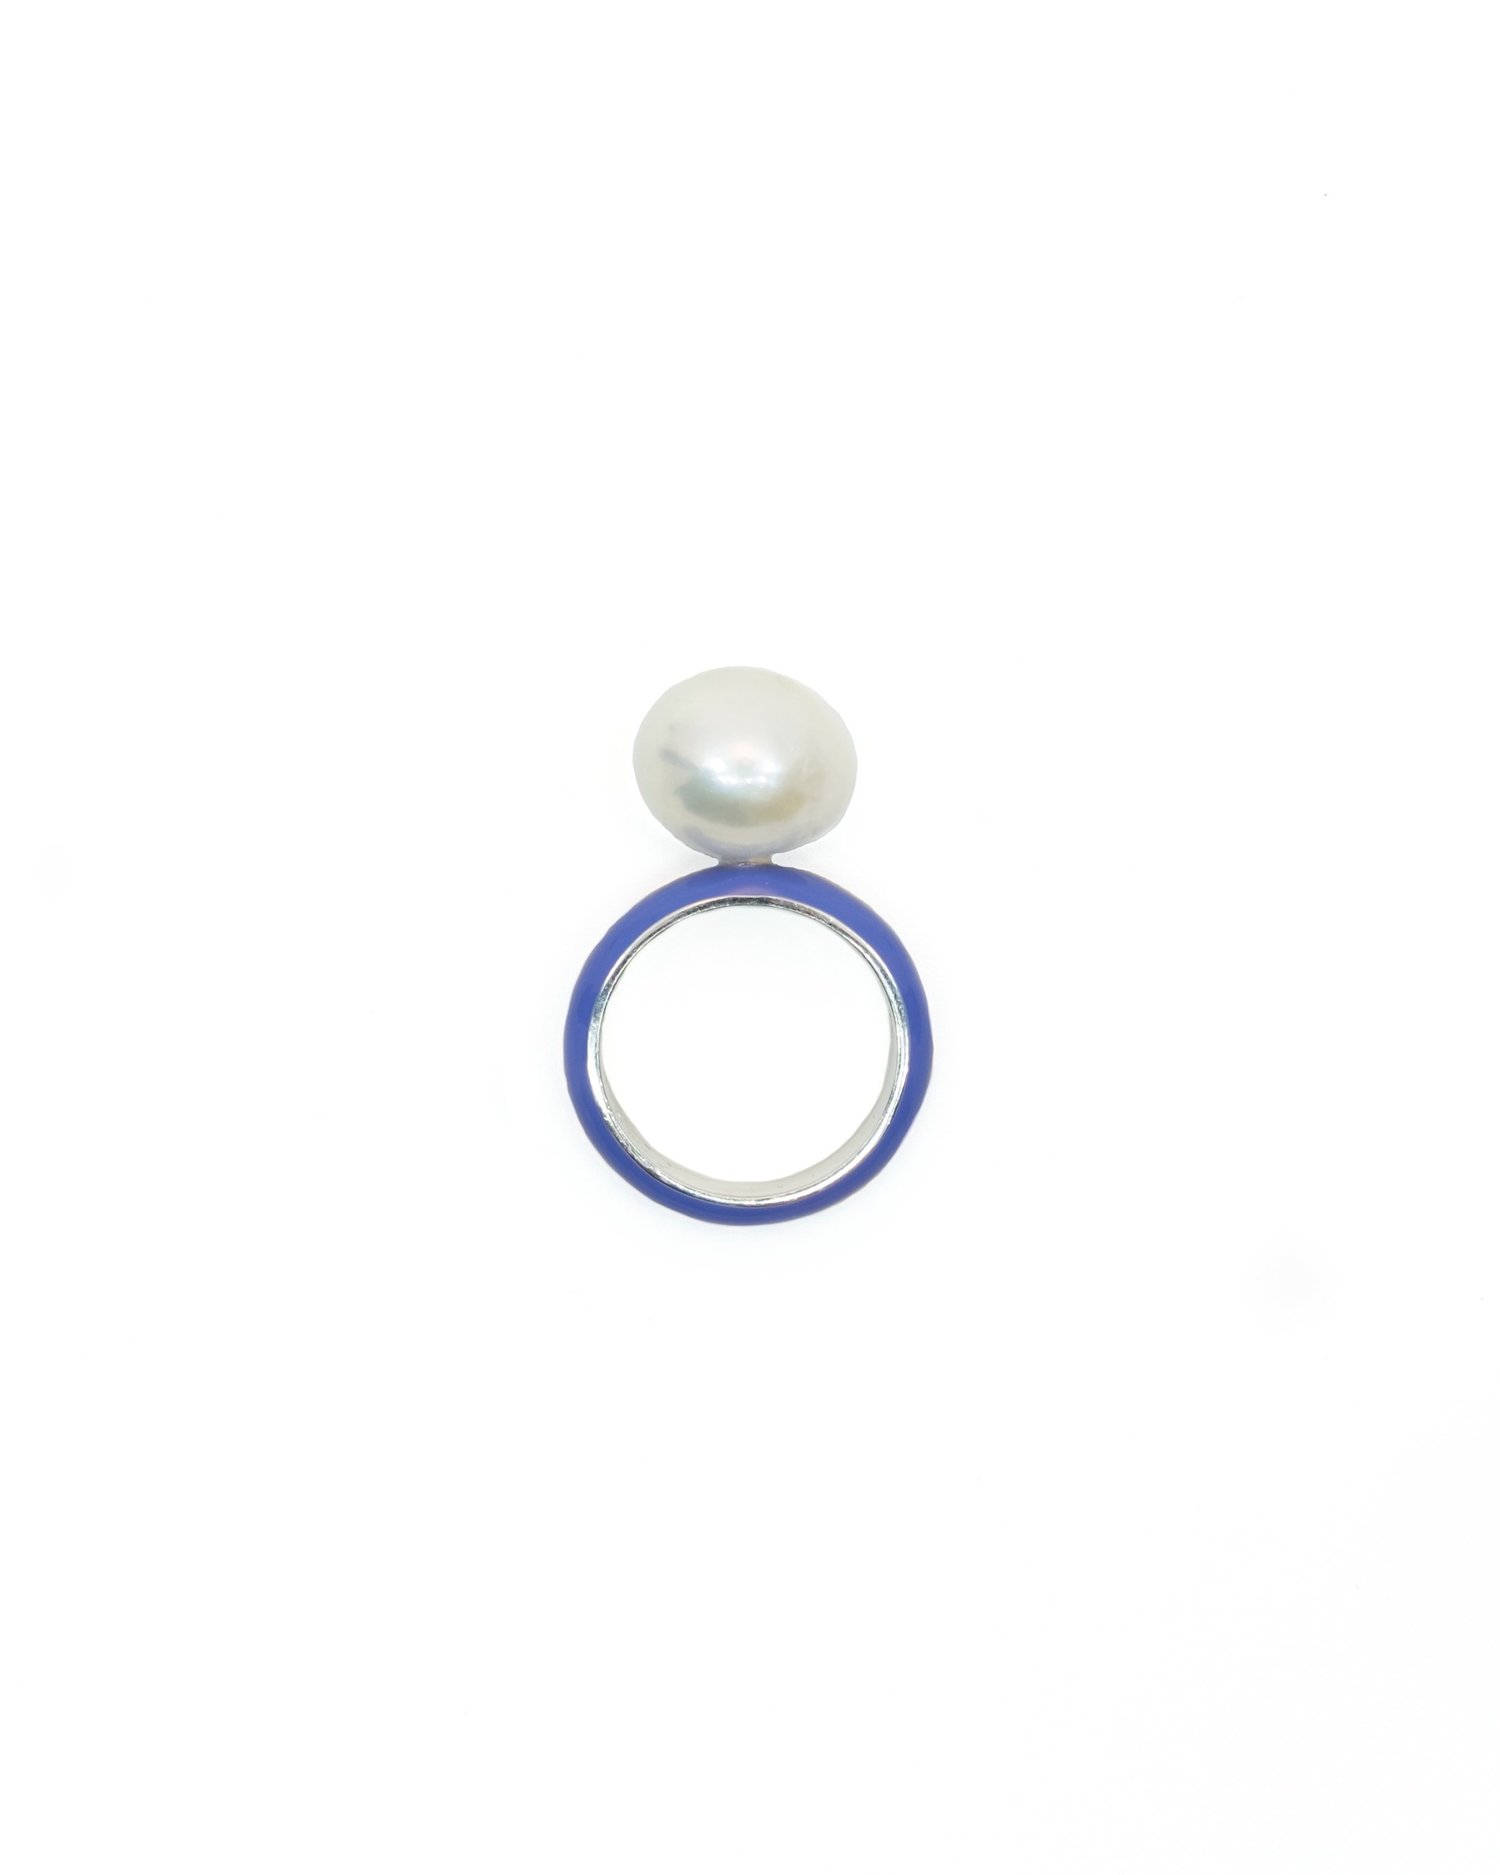 Enamel Baroque Pearl Ring in 92.5 Sterling Silver — FRY POWERS